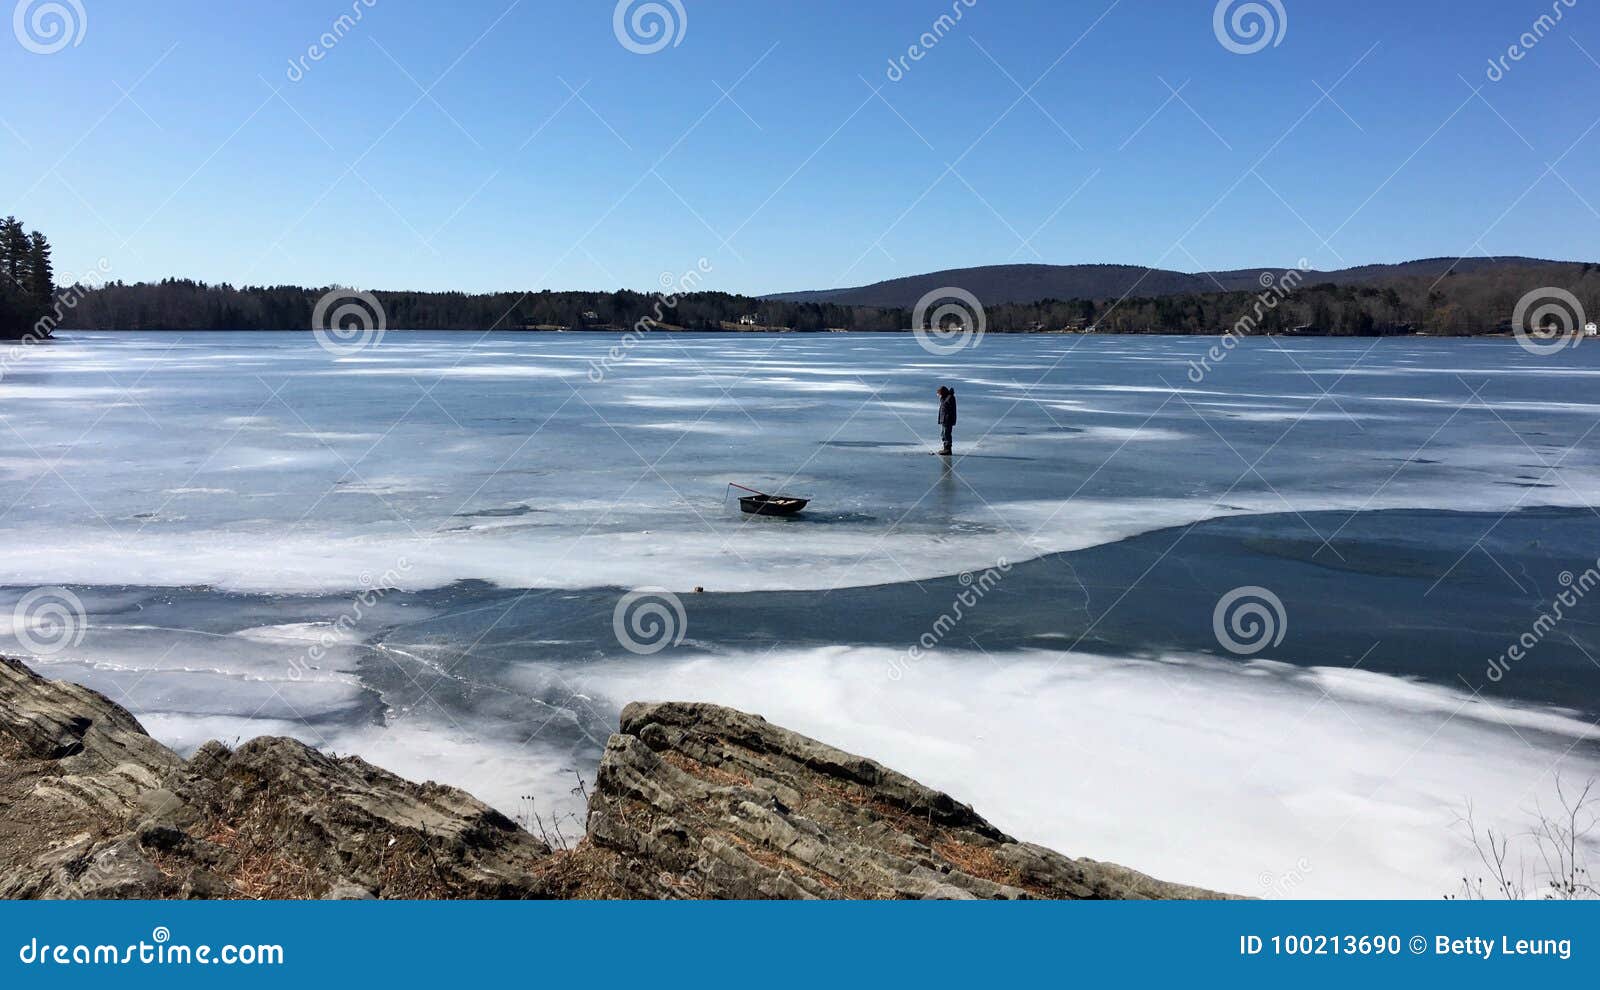 frozen onota lake in pittsfield, massachusetts